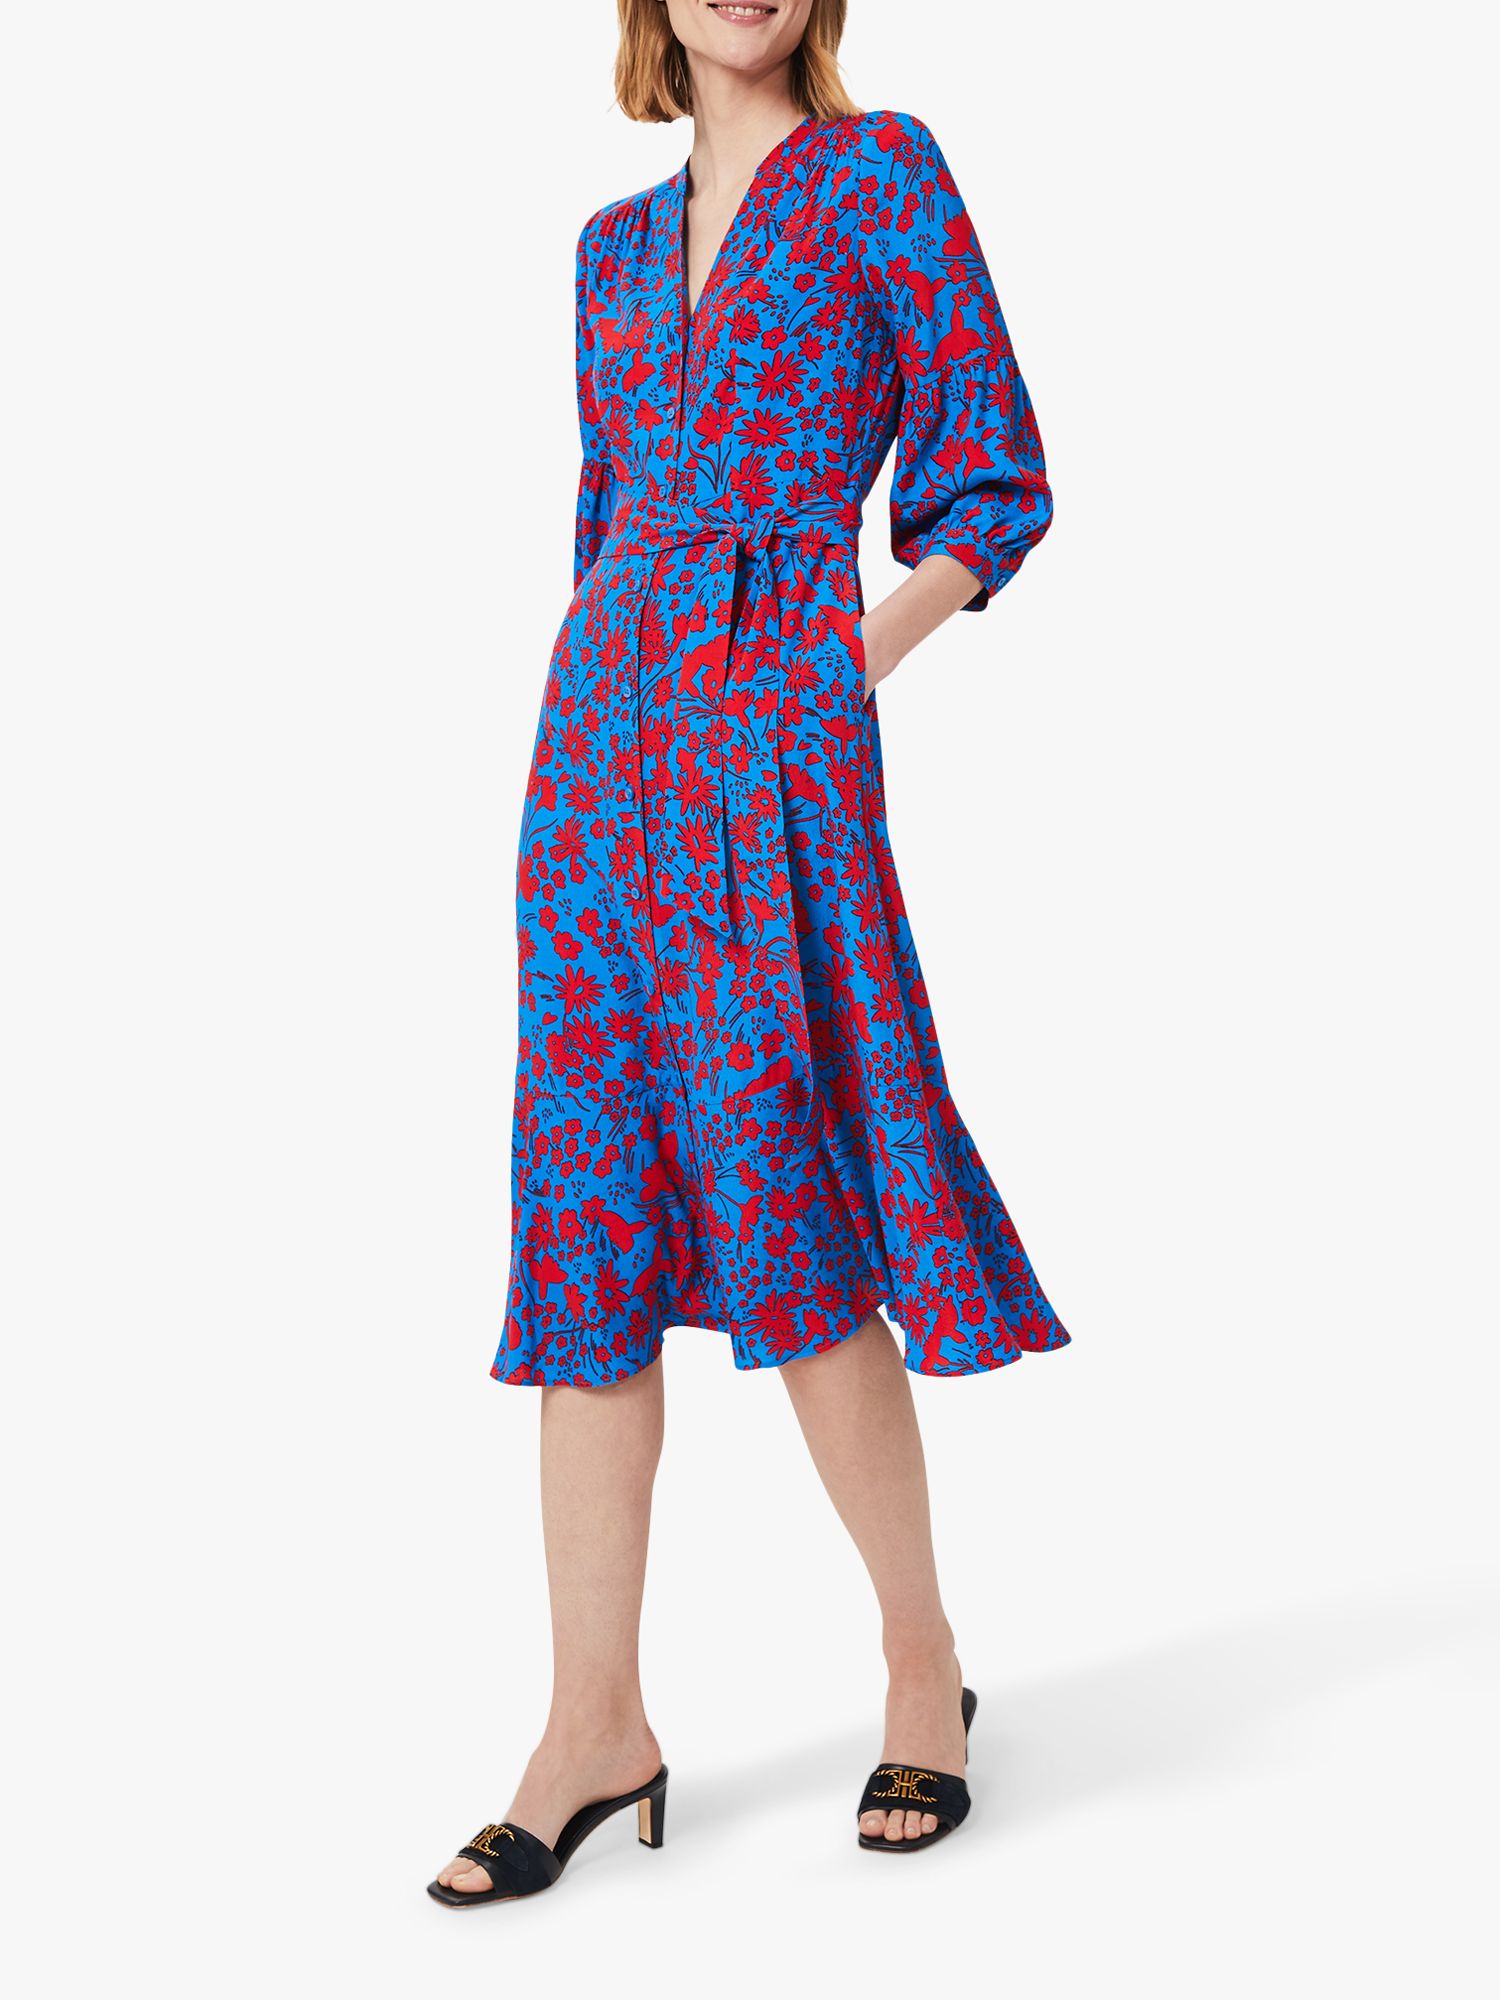 Hobbs Carla Floral Print Midi Dress, Red/Azure Blue